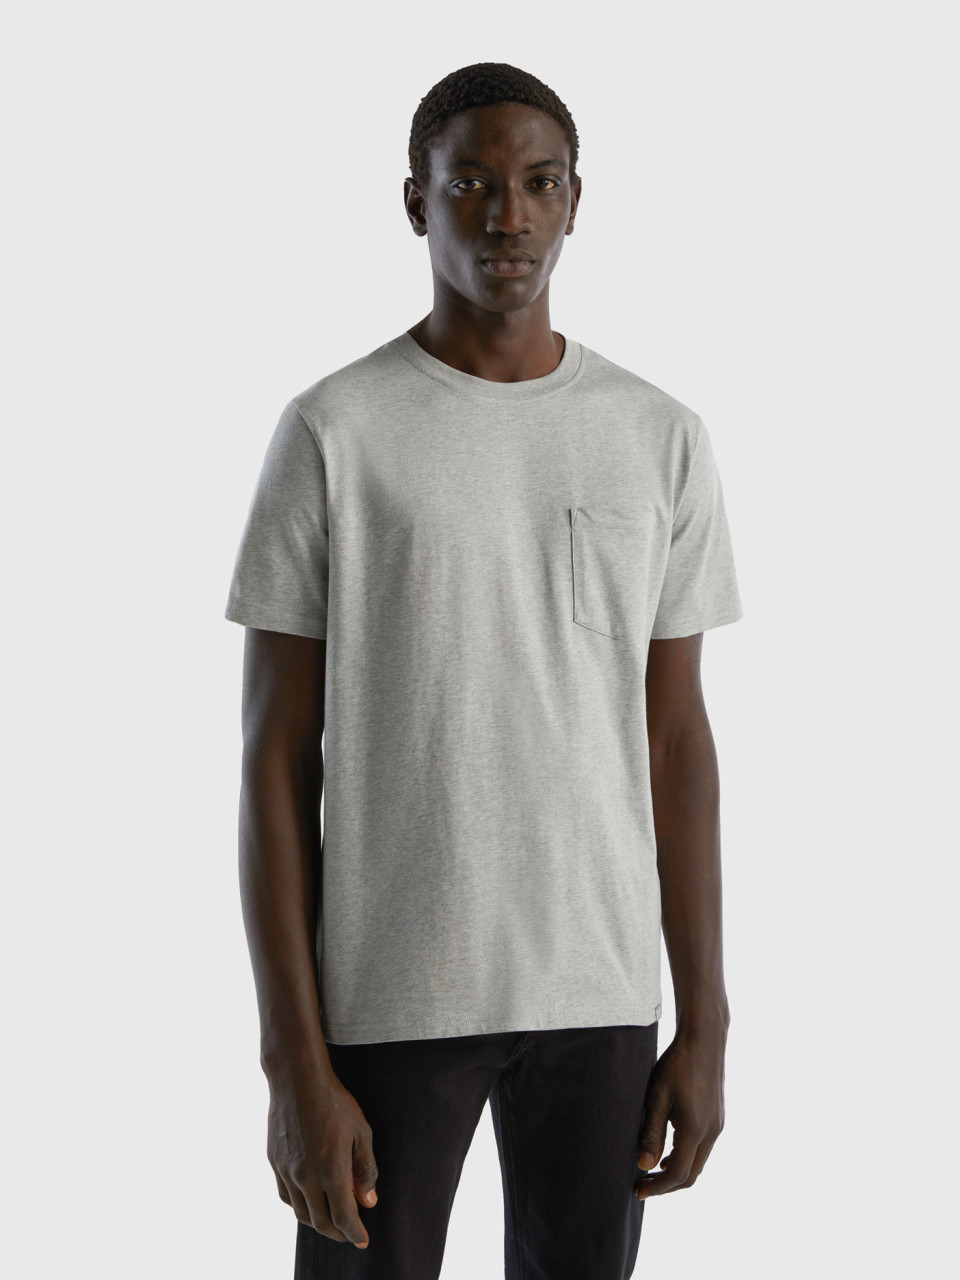 Benetton, 100% Cotton T-shirt With Pocket, Light Gray, Men